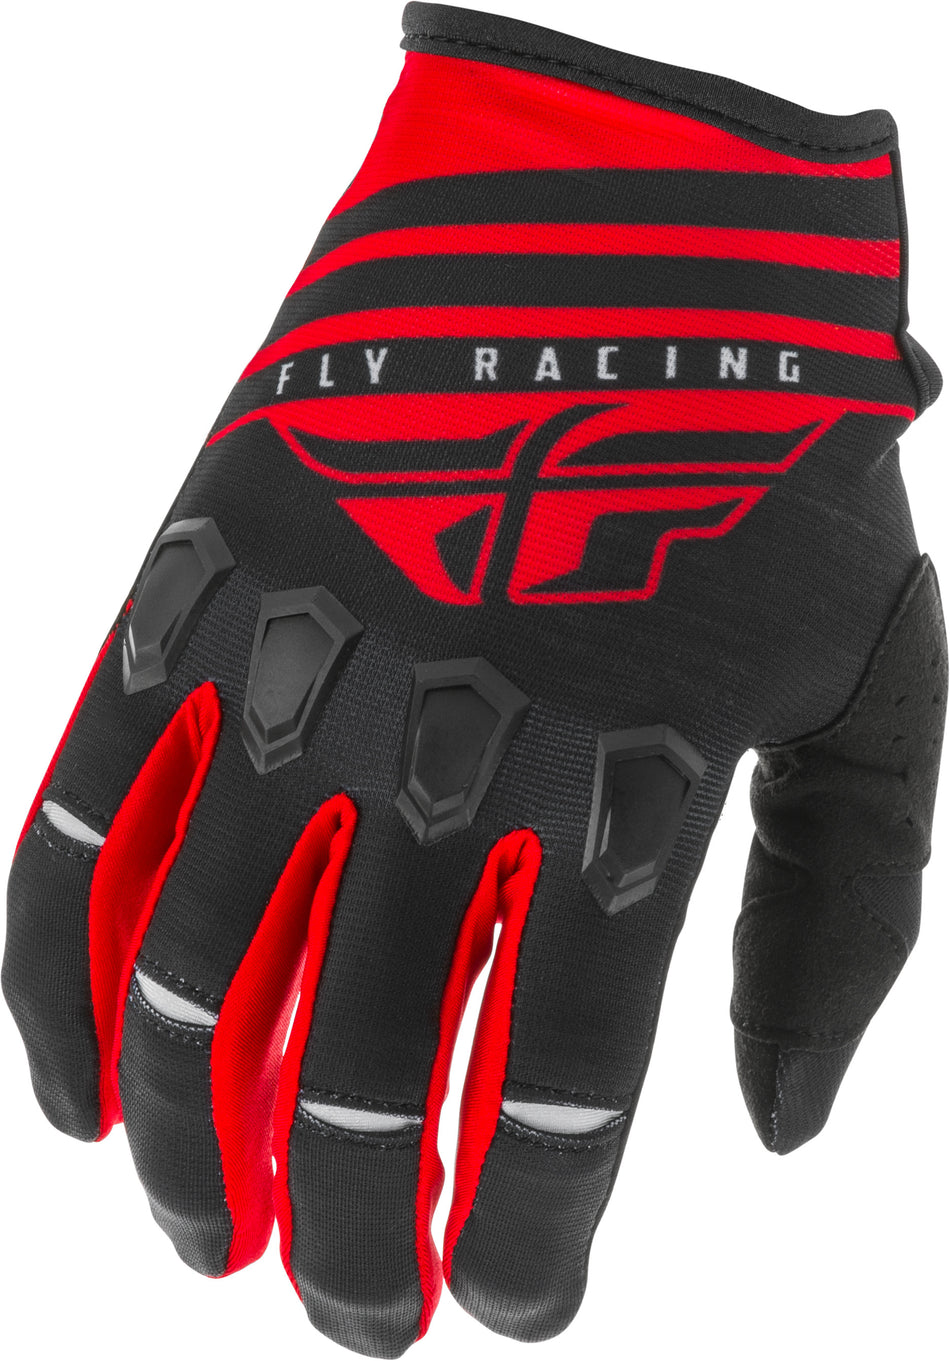 FLY RACING Kinetic K220 Gloves Red/Black/White Sz 06 373-51306